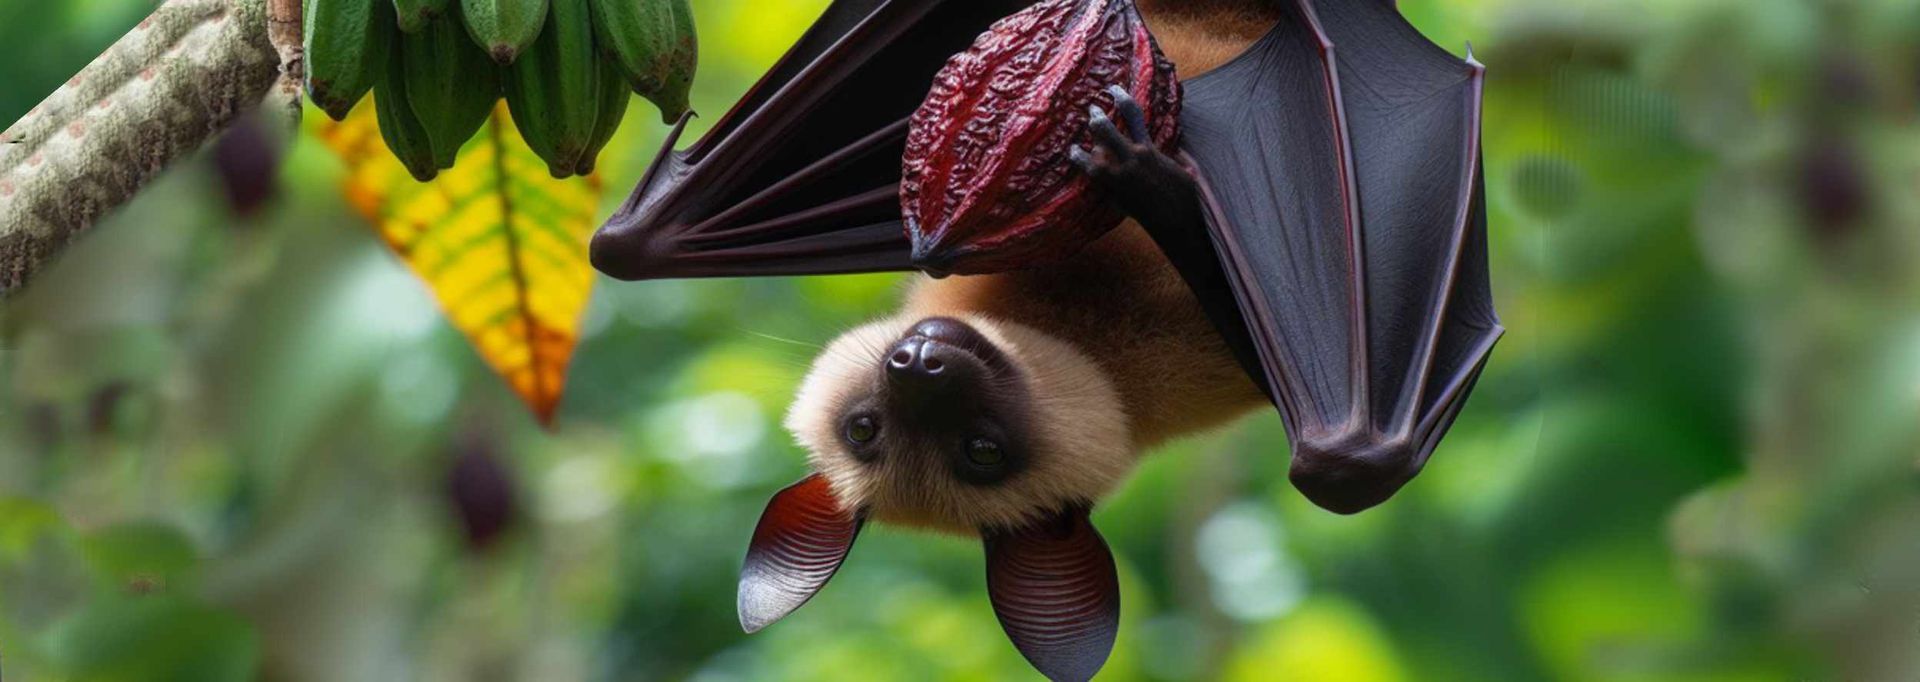 murciélago frugívoro